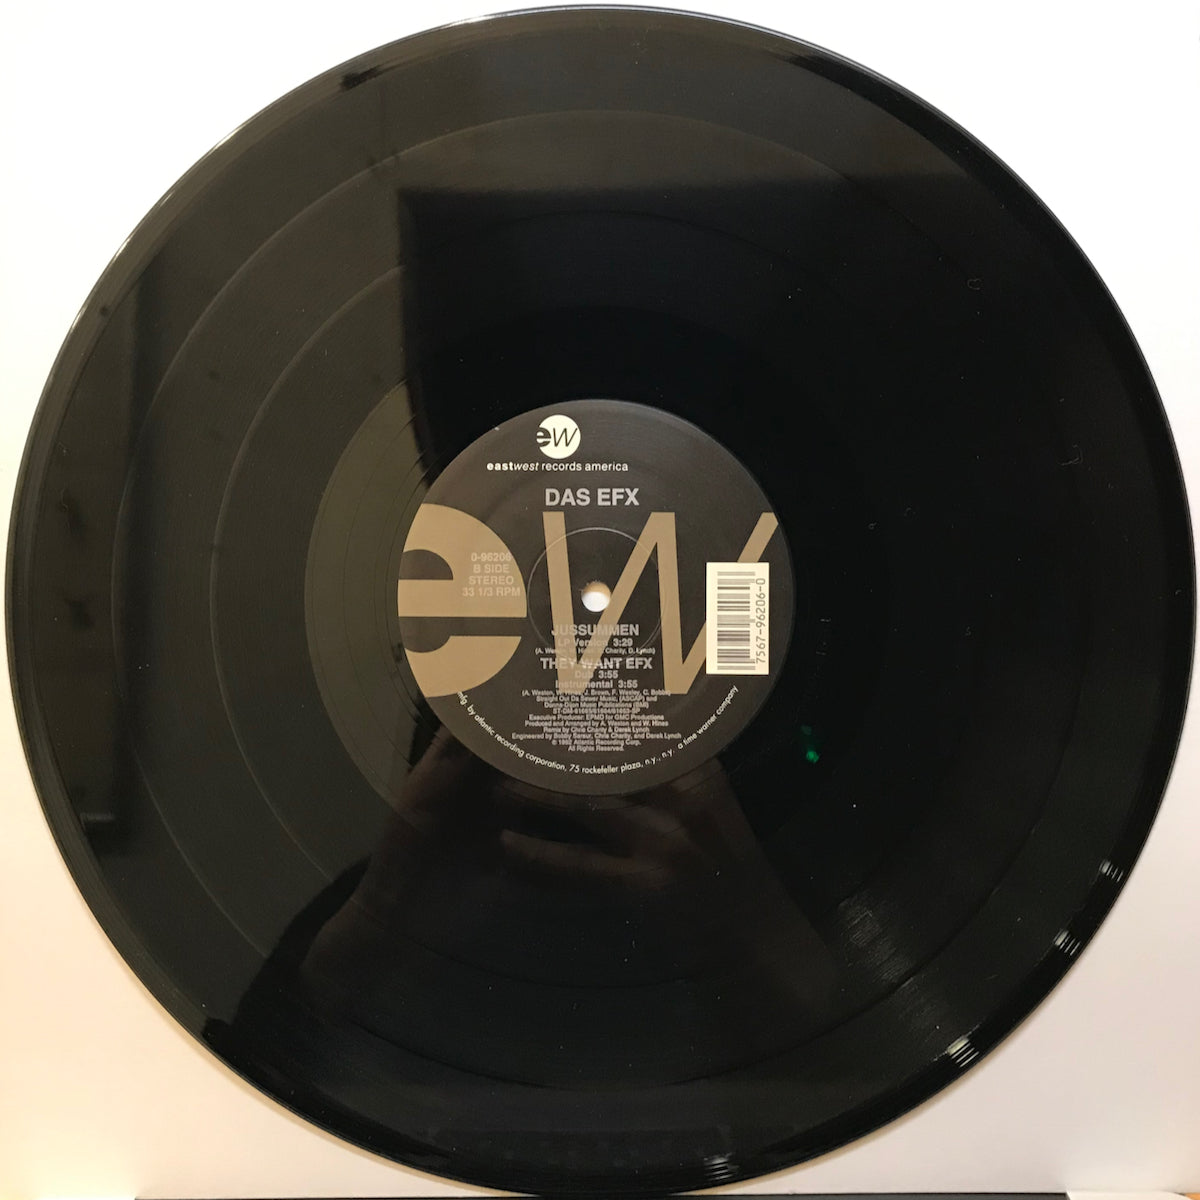 Das Efx / They Want Efx | VINYL7 RECORDS